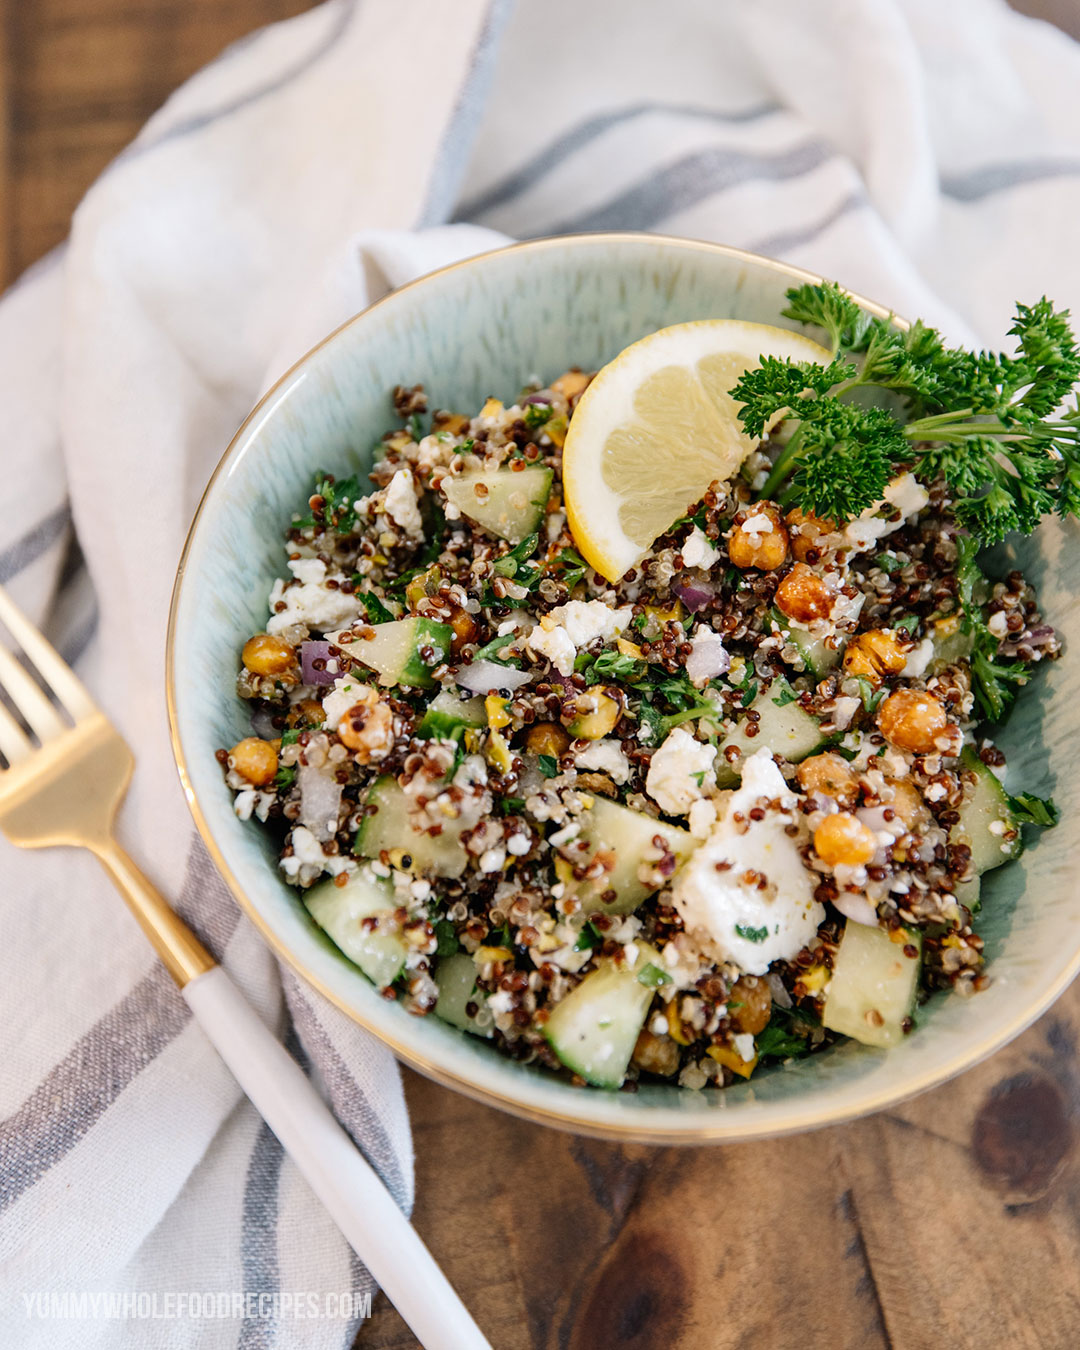 Delicious Quinoa Salad Recipe - better than Jennifer Aniston salad